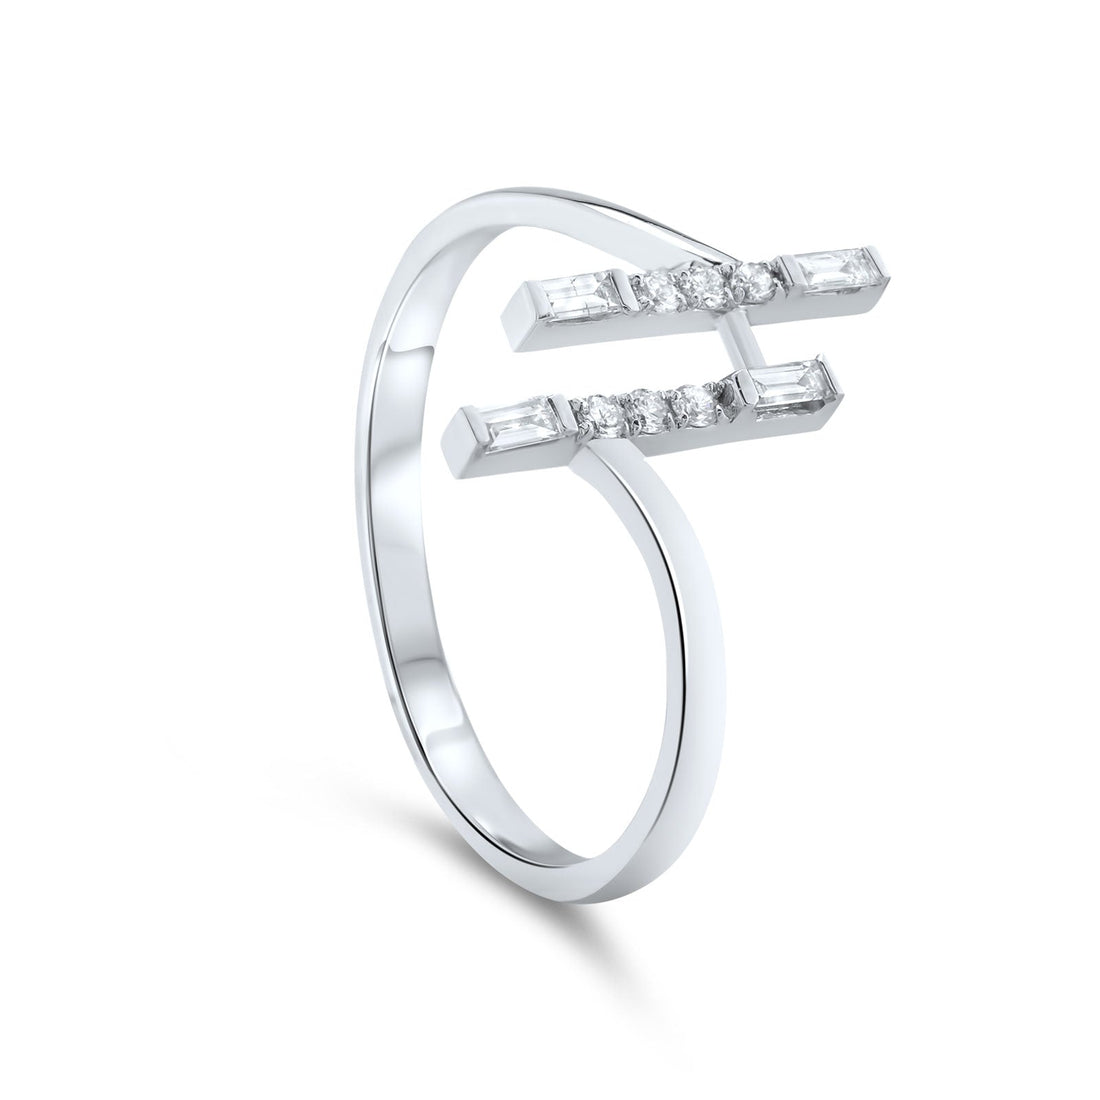  14K White Gold Double T Bar Ring - Diamond ring Shop online from Artisan Brands